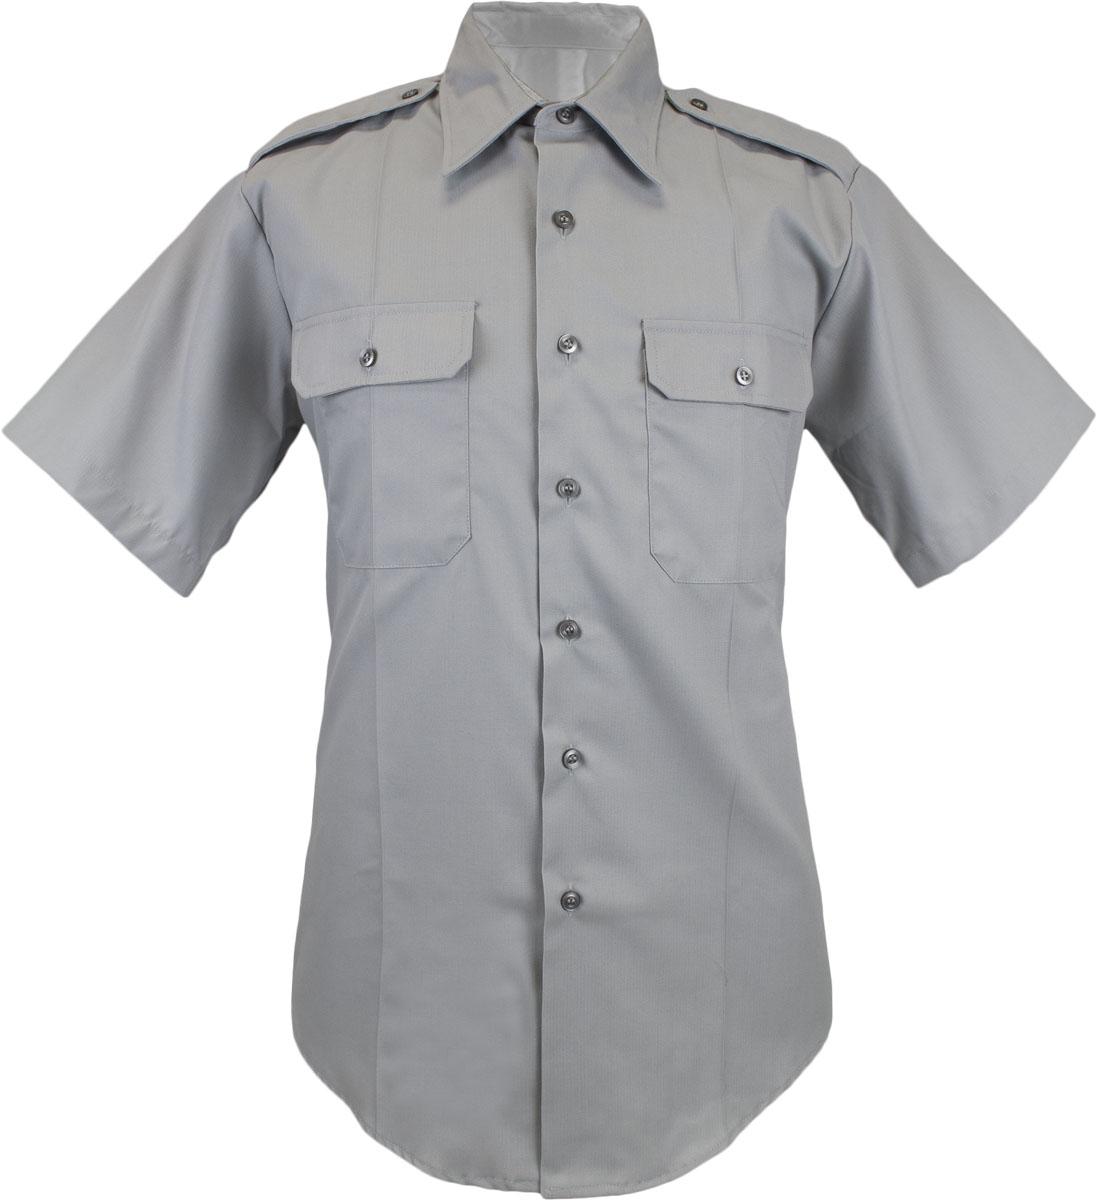 Male Army Gray Short Sleeve Shirt